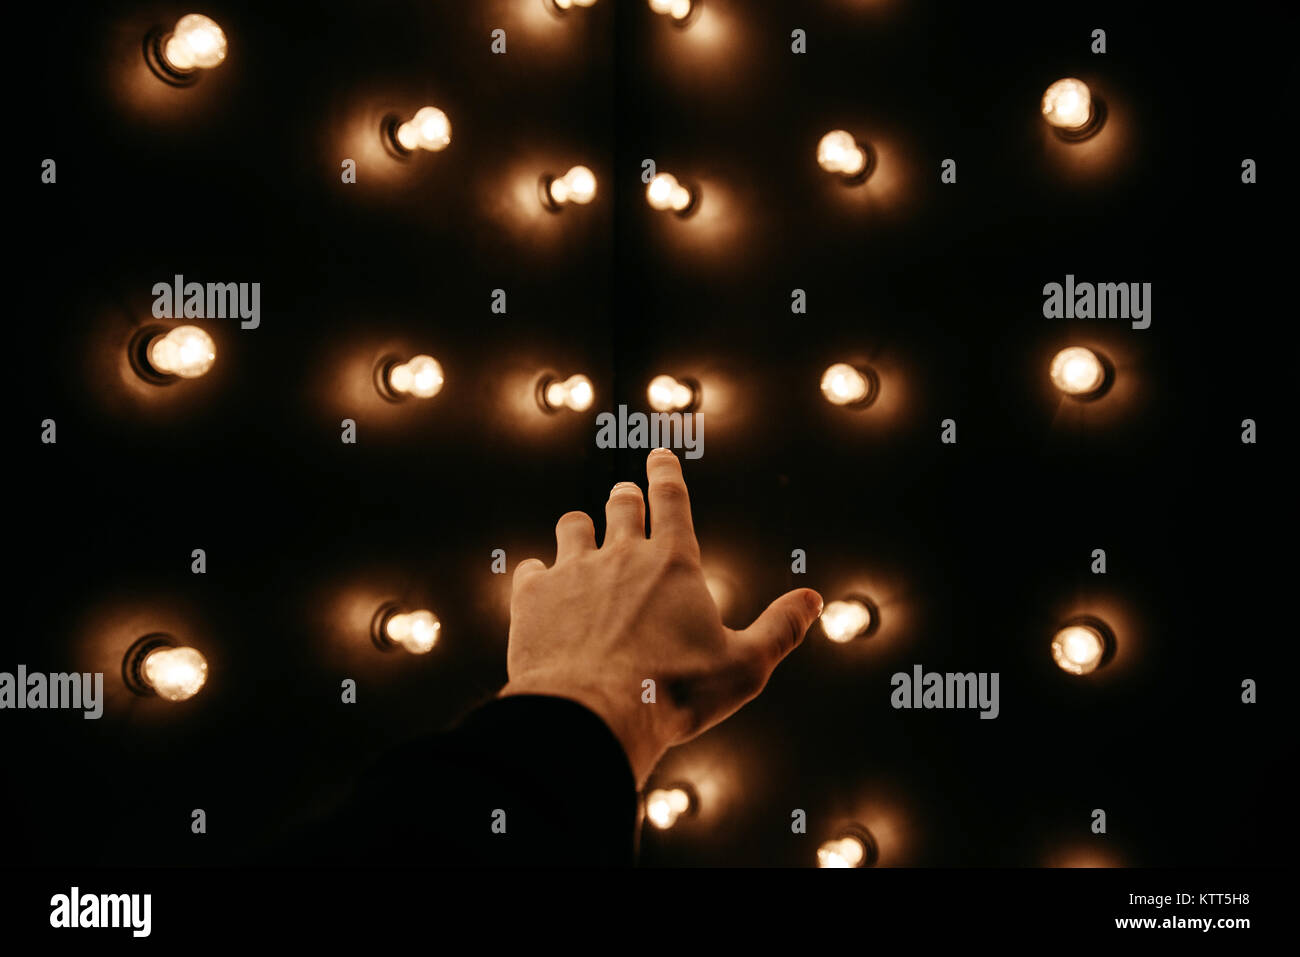 Human hand reaching for light bulbs Stock Photo